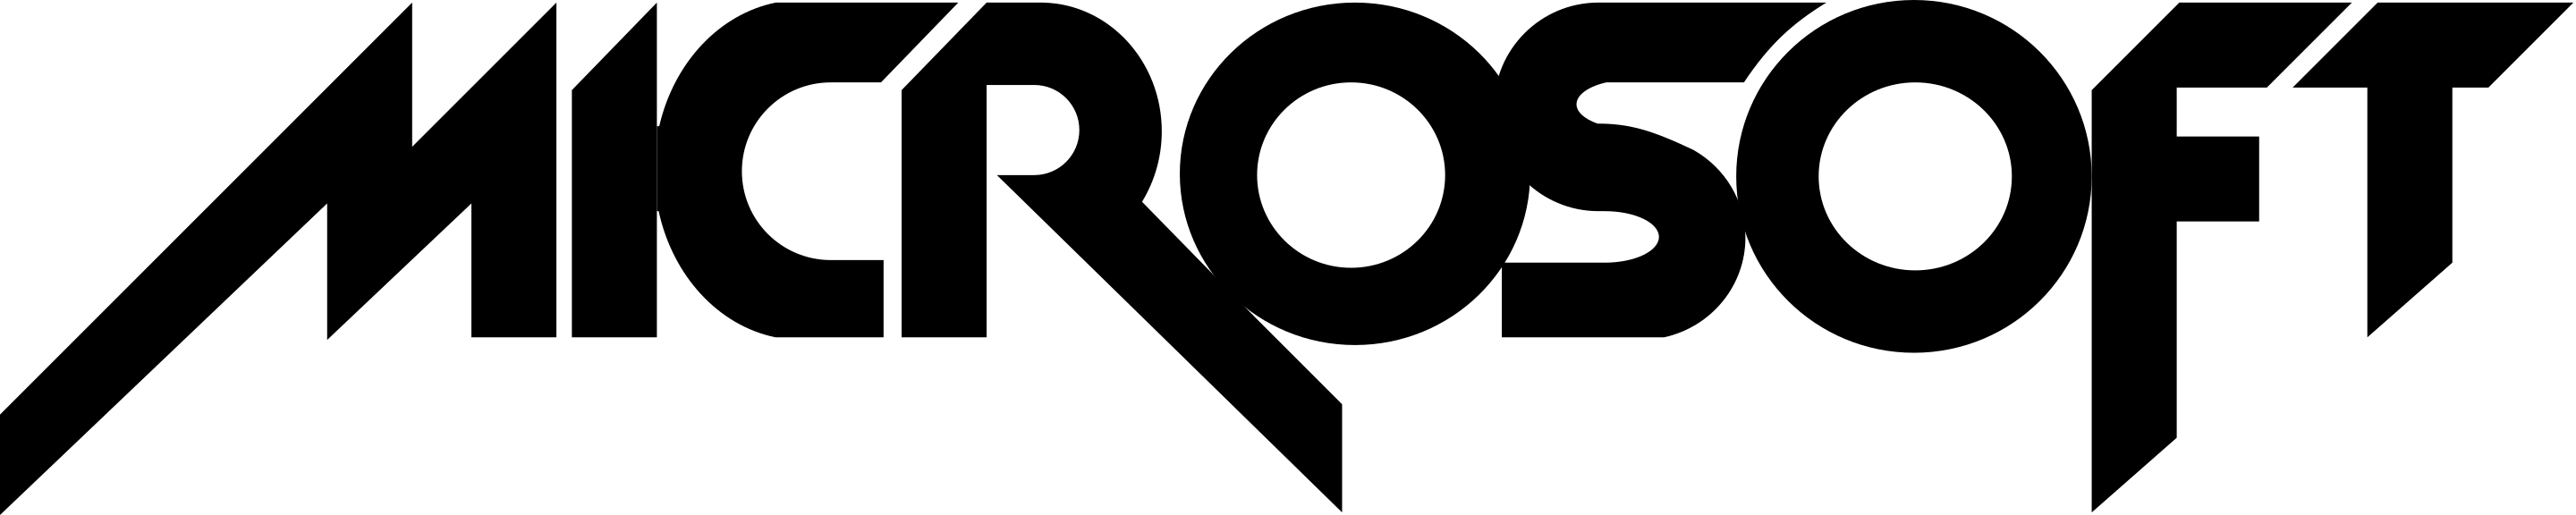 Microsoft logo 1980